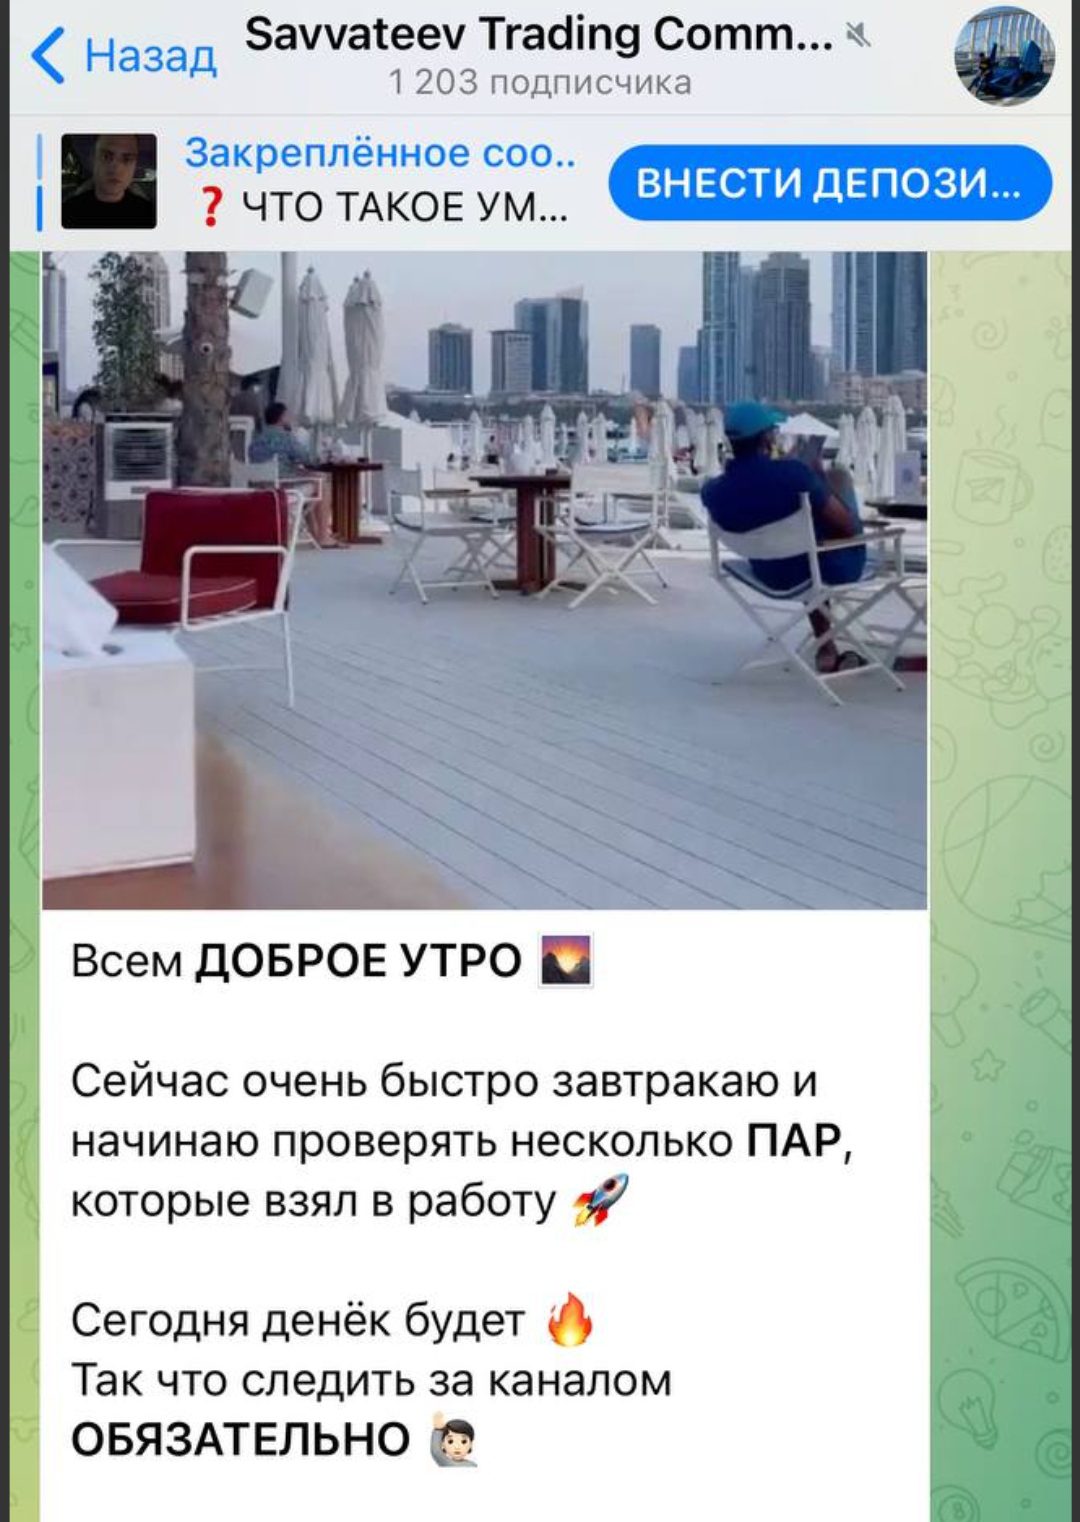 Savvateev trading community  телеграмм